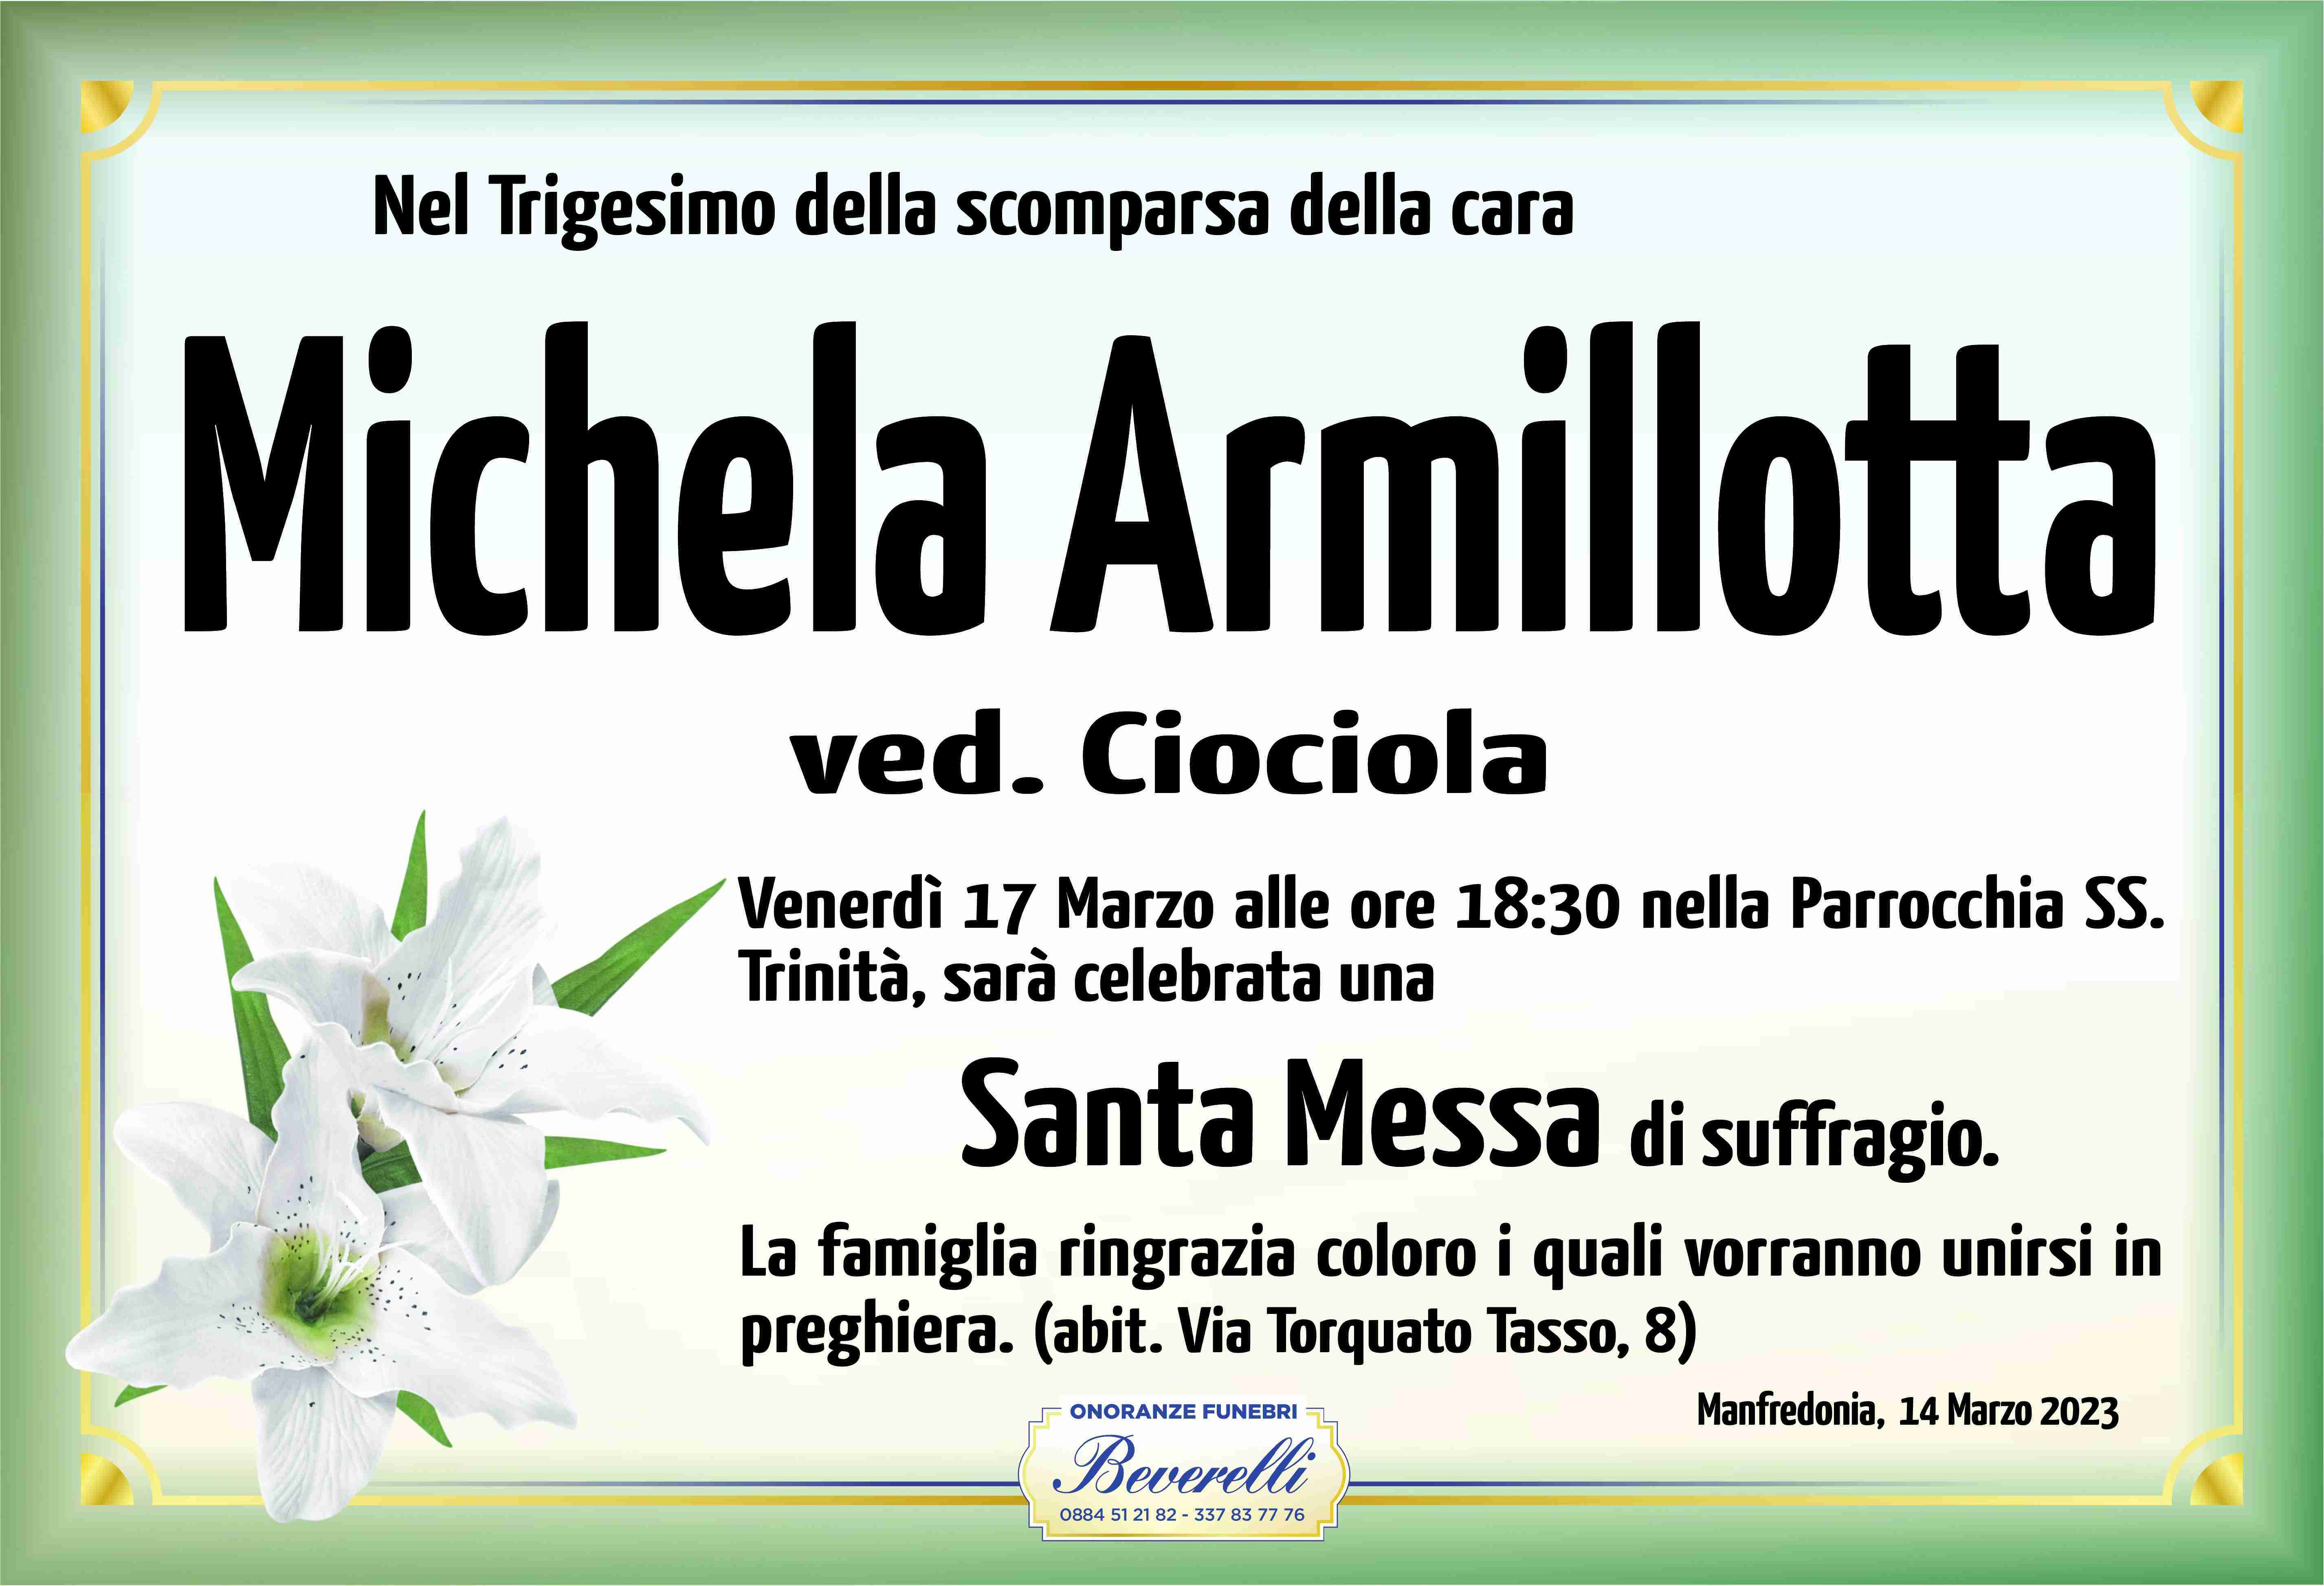 Michela Armillotta